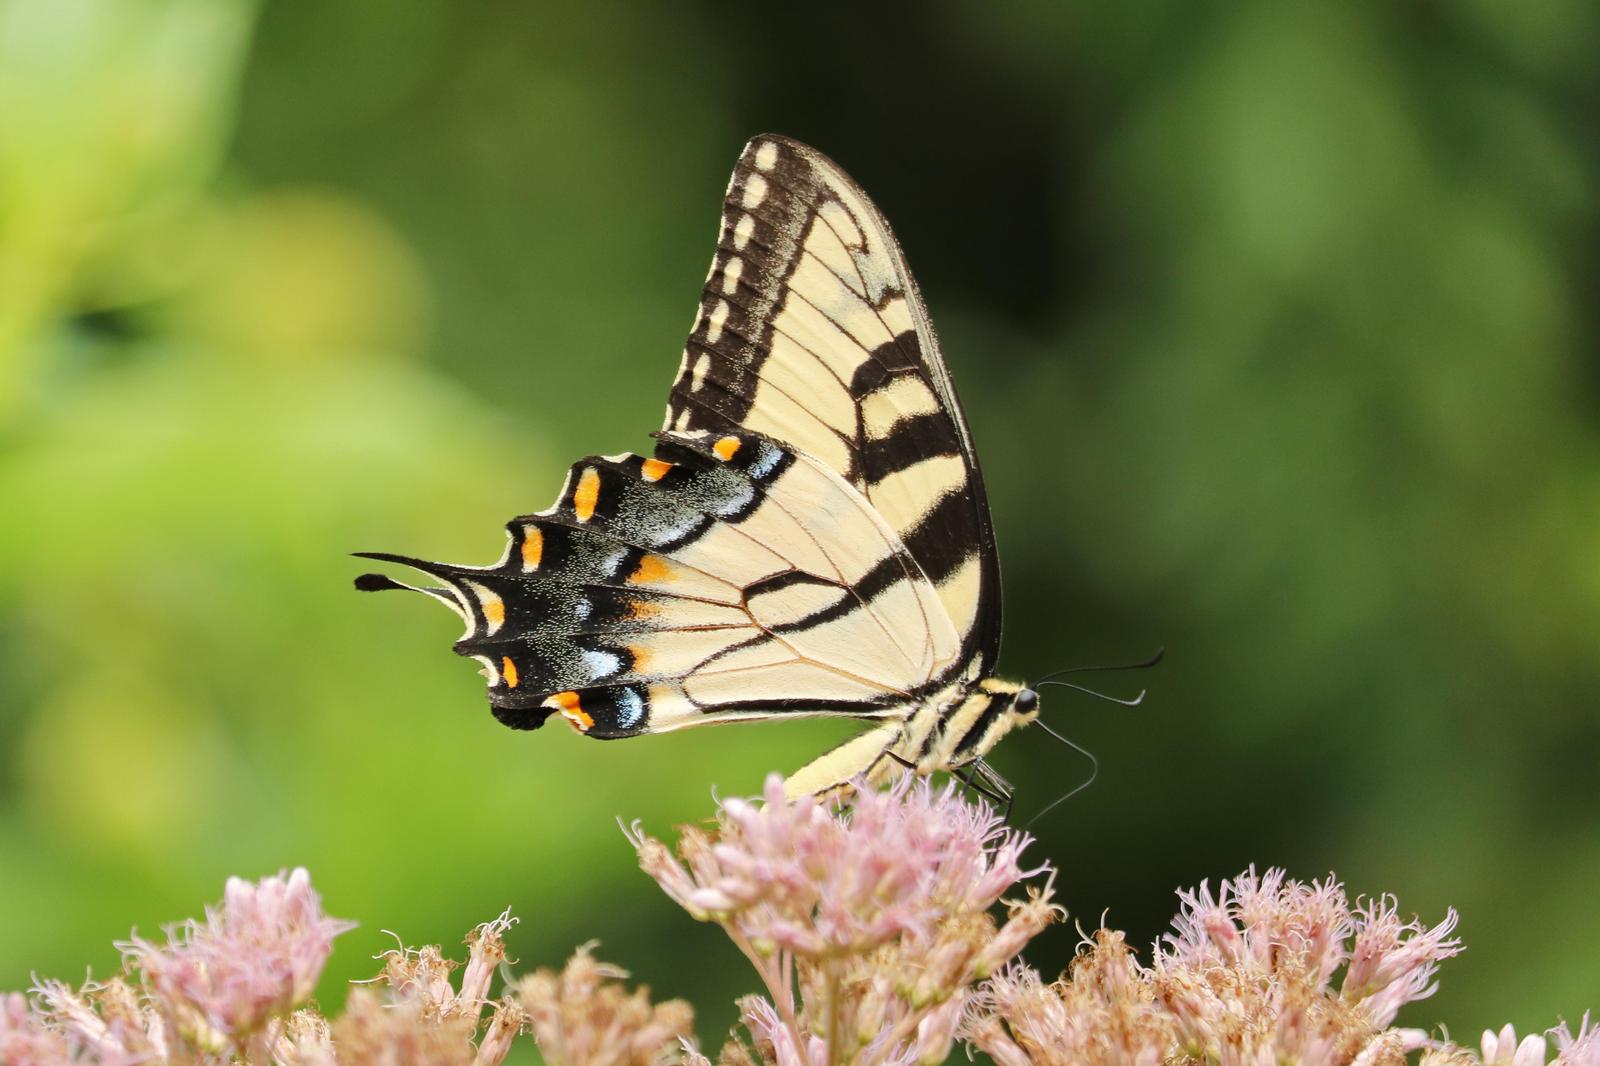 Eastern Tiger Swallowtail Photo by Kristy Baker